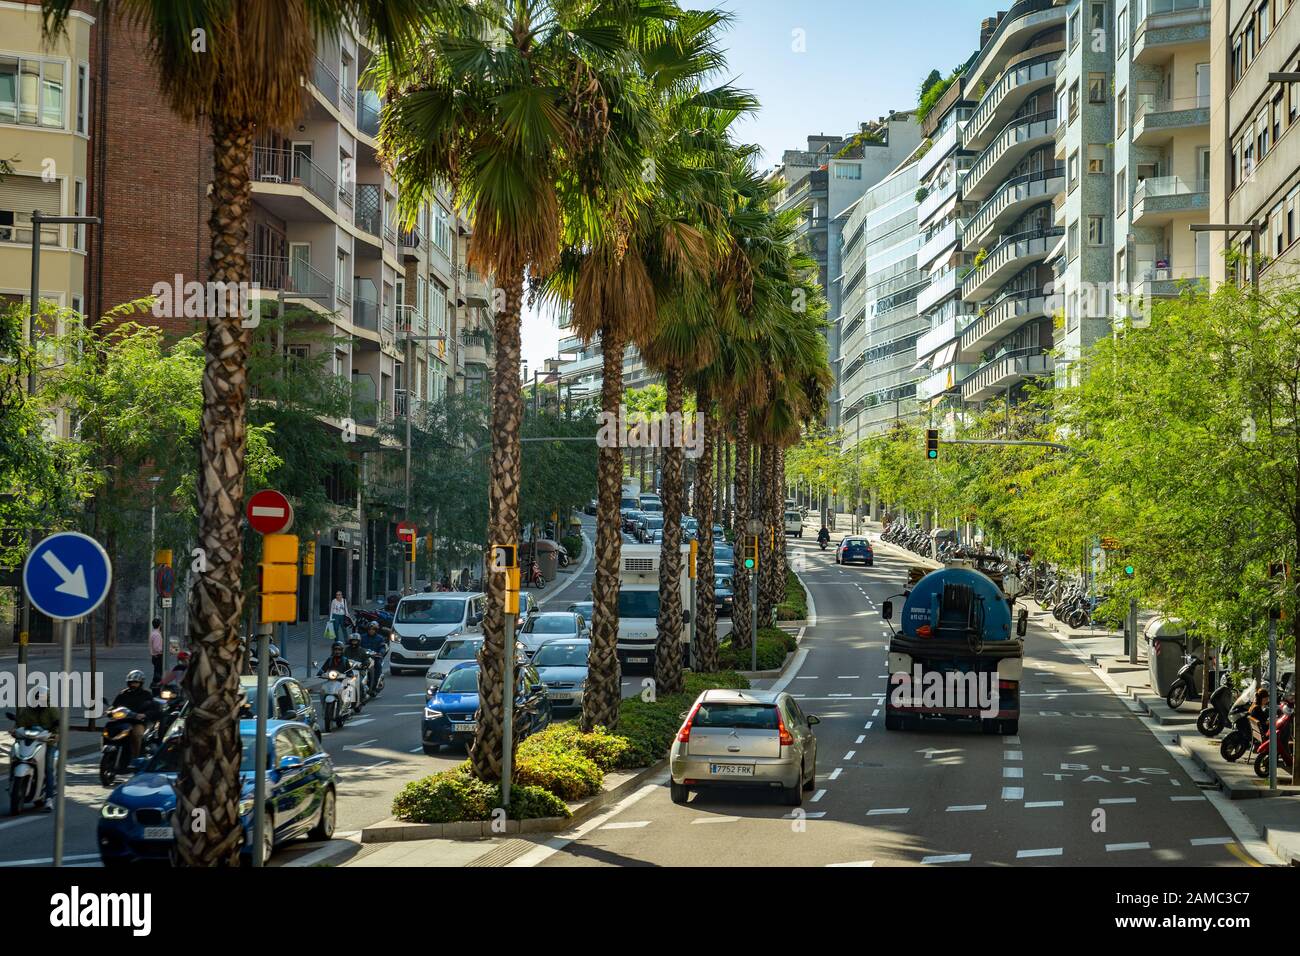 Barcelona, Spain - Driving along Barcelona streets Stock Photo